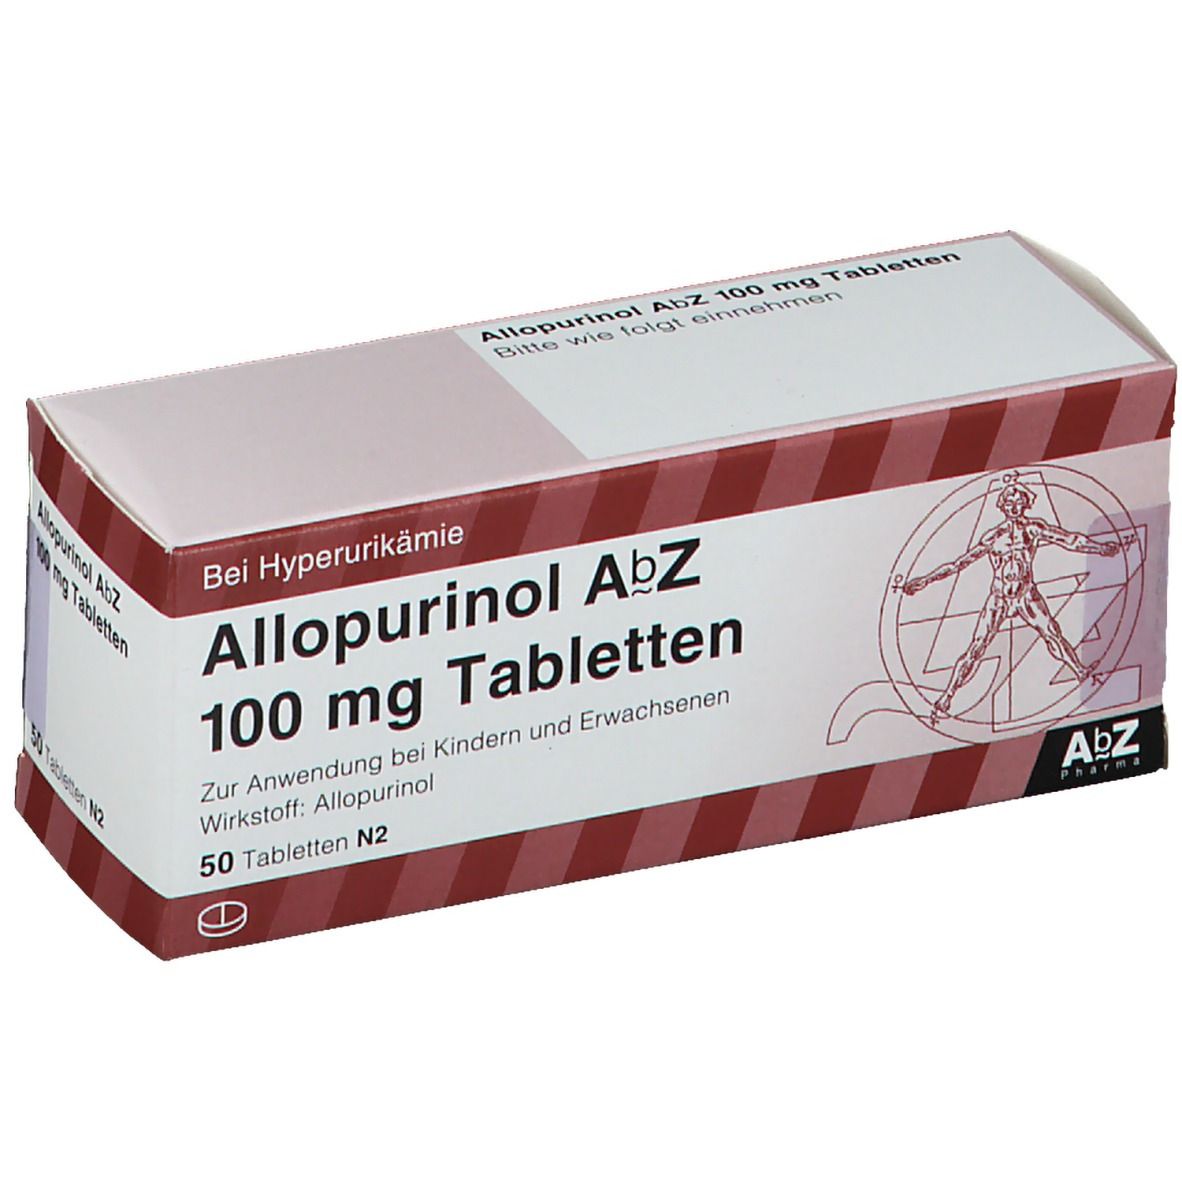 Allopurinol AbZ 100Mg